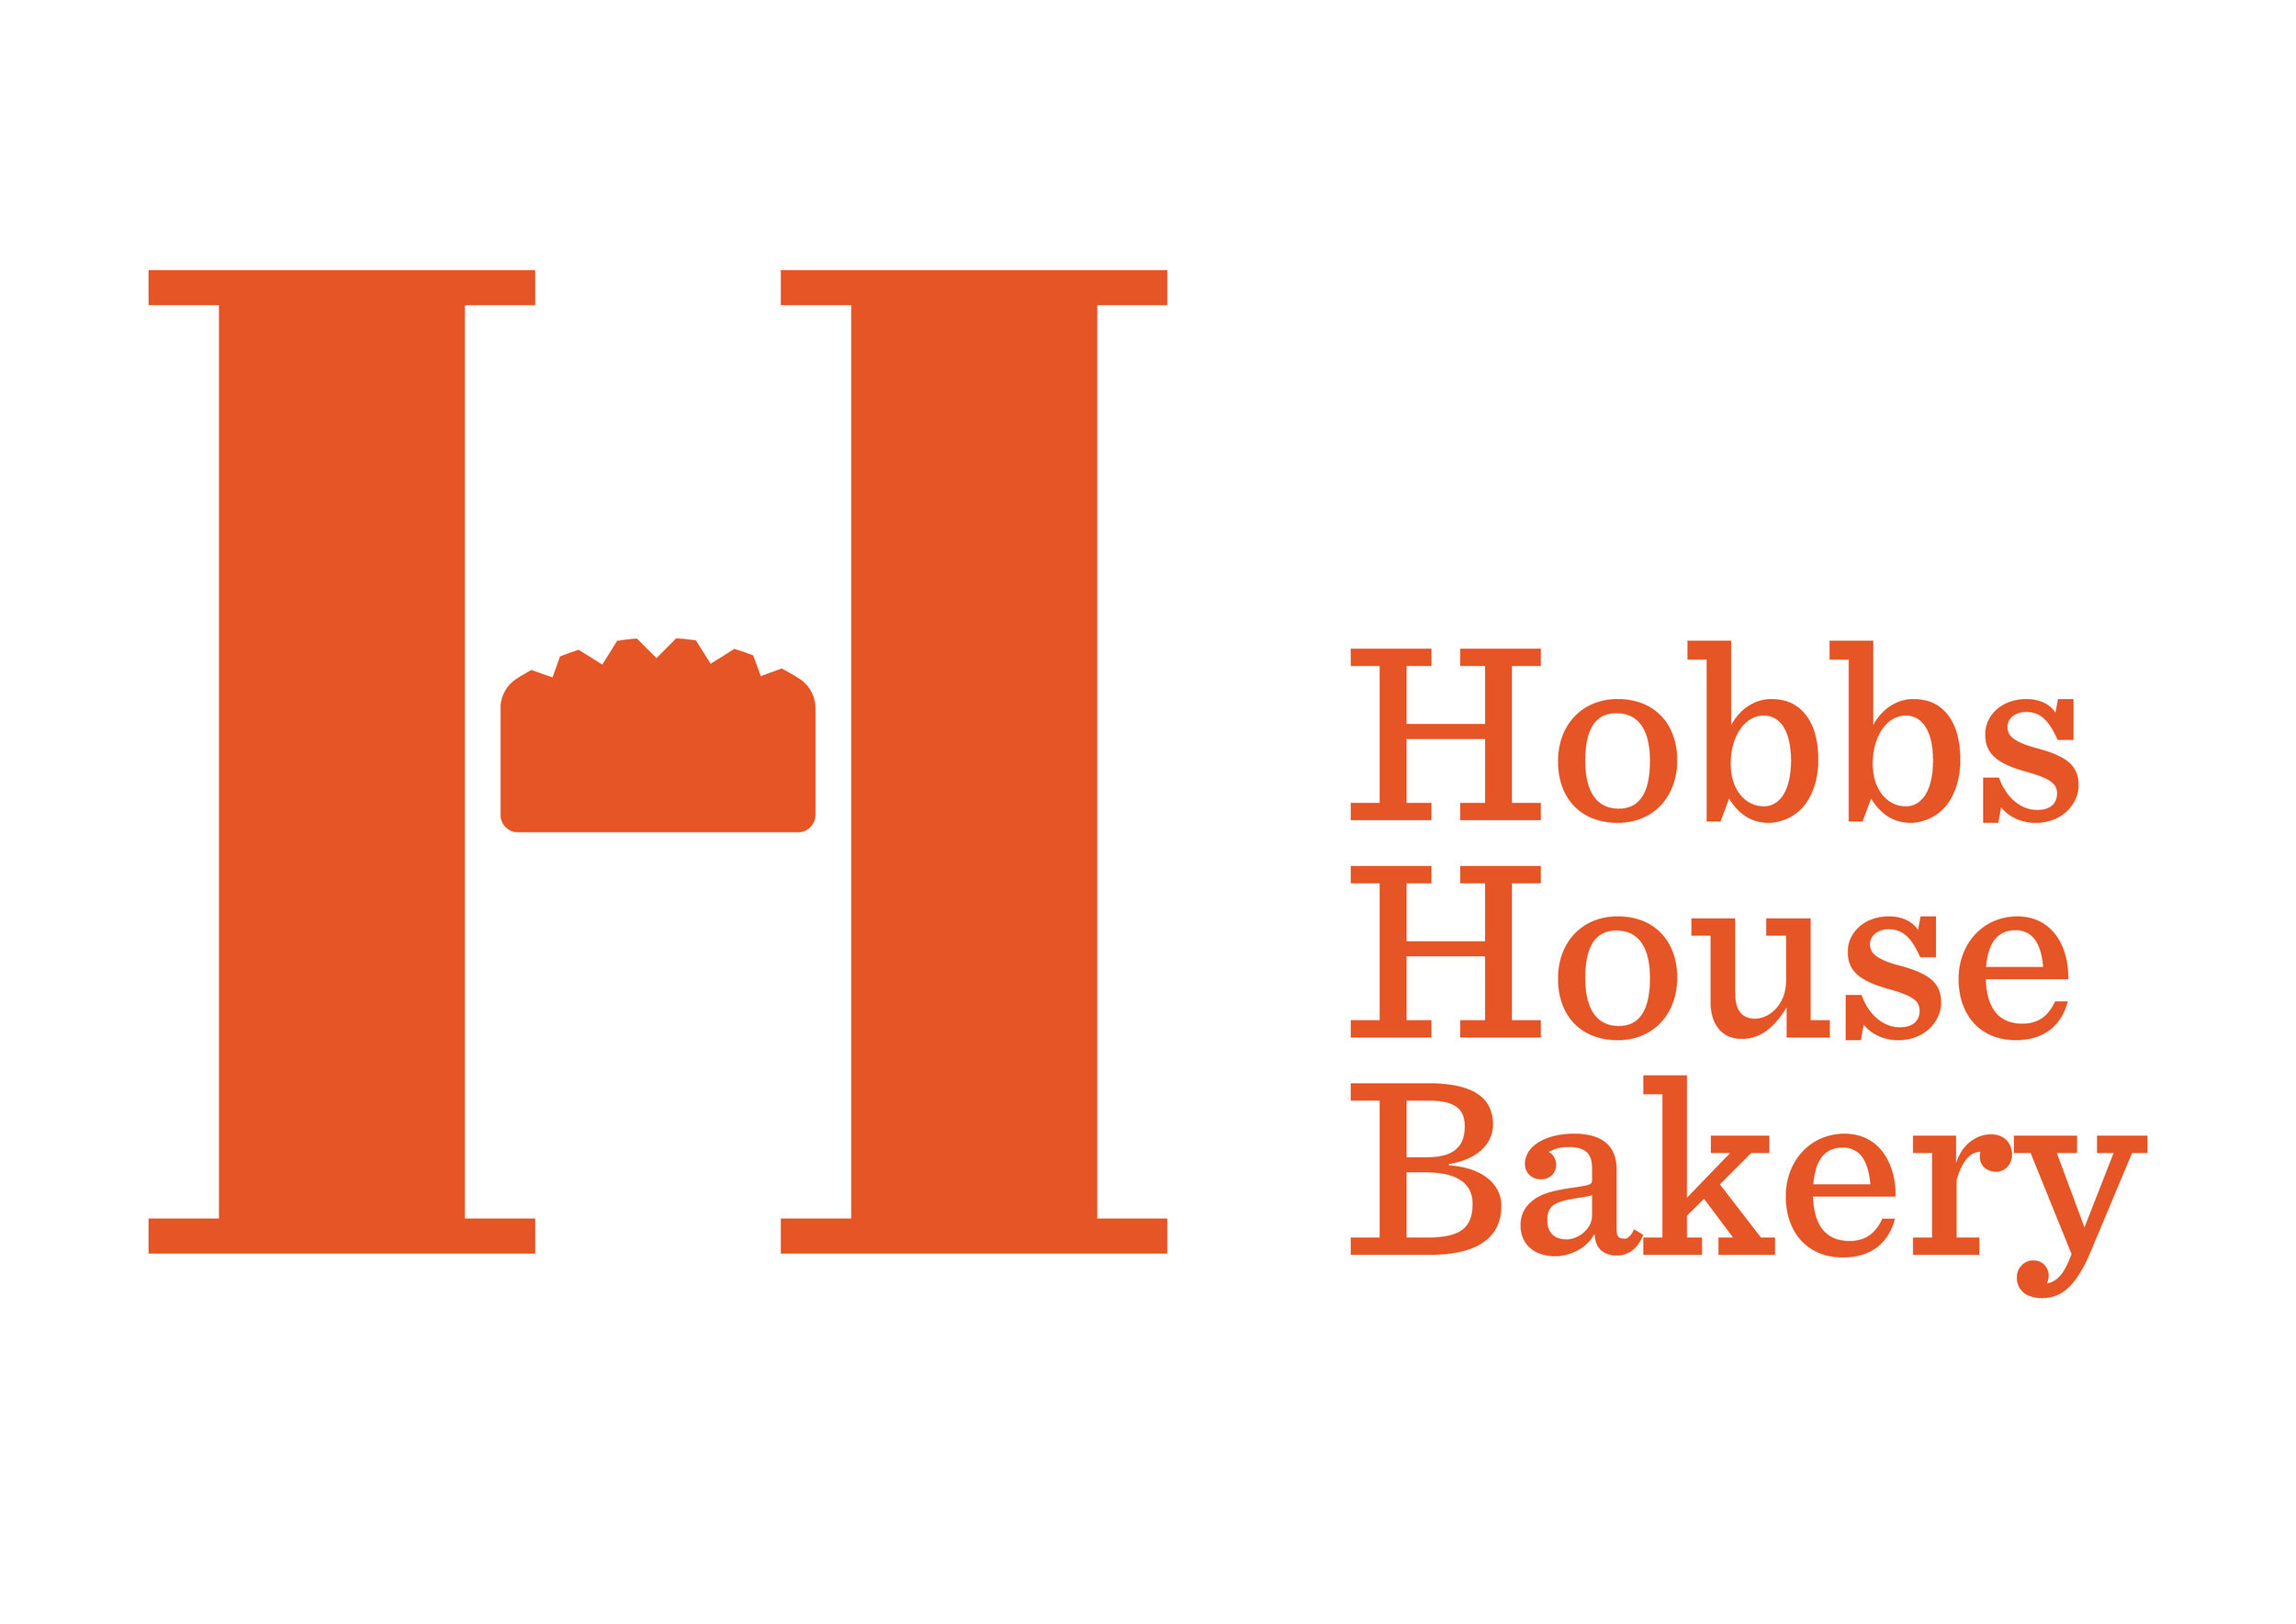 HHB logo and type.jpg